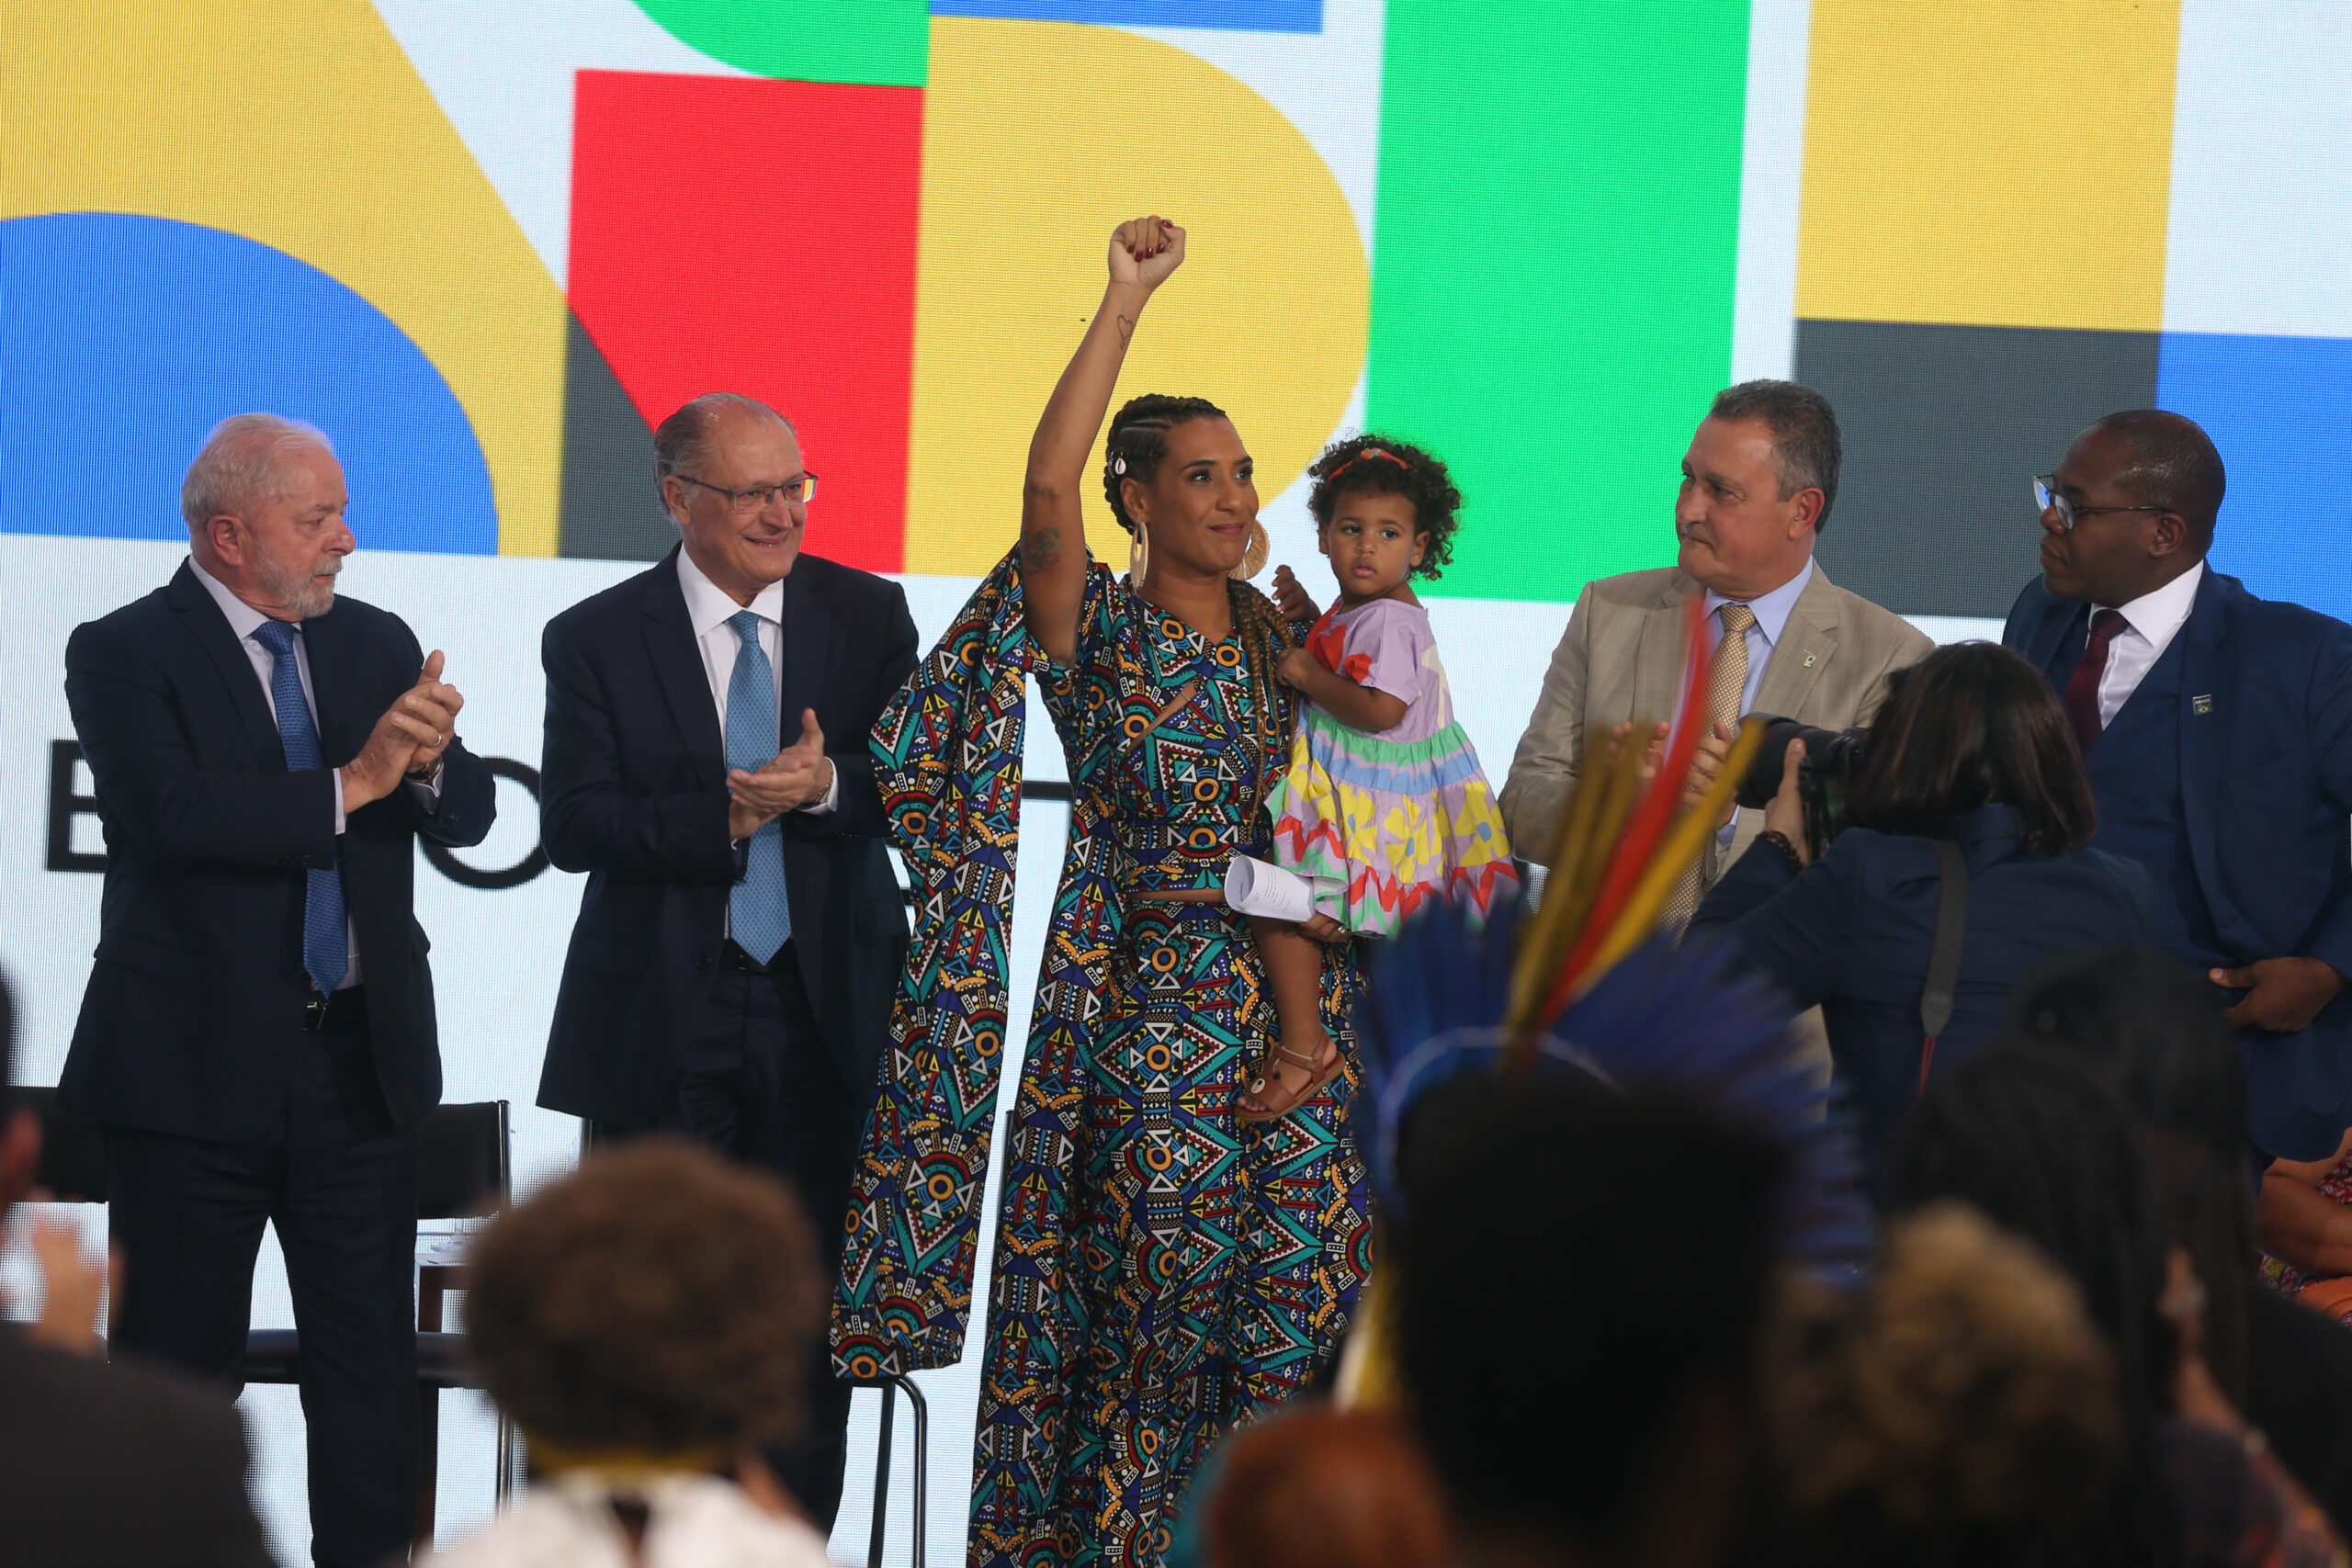 President Luiz Inácio Lula da Silva claps during the inauguration ceremony of the ministers of Racial Equality, Anielle Franco, and Indigenous Peoples, Sônia Guajajara. Photo: Valter Campanato/Agência Brasil